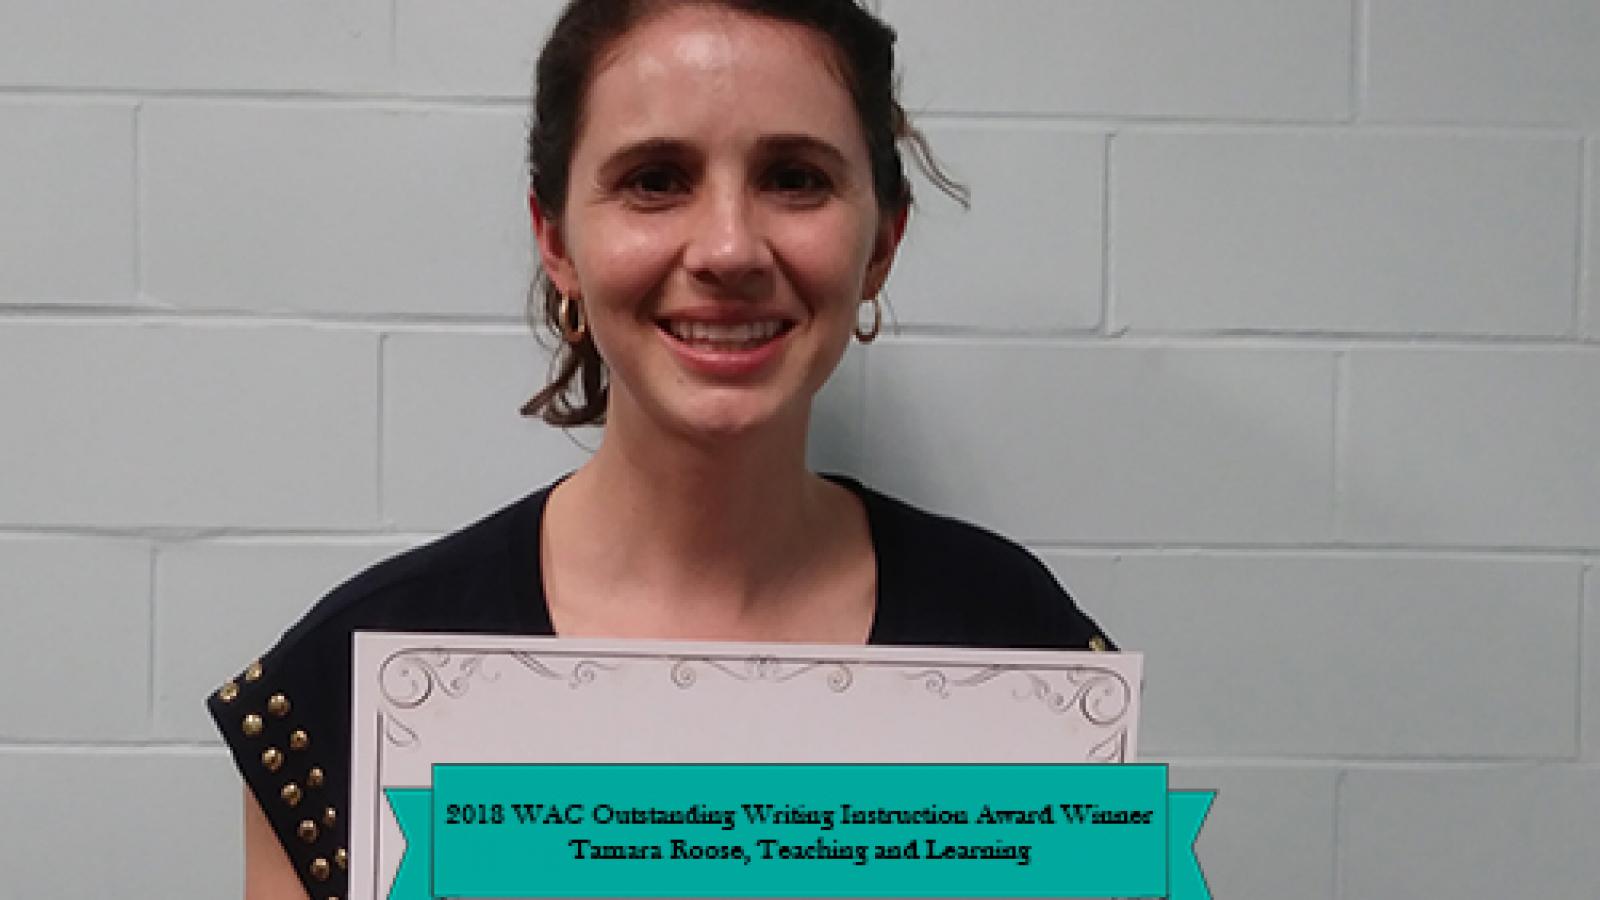 2018 WAC Outstanding Writing Instruction Award Winner, Tamara Roose, Teaching and Learning